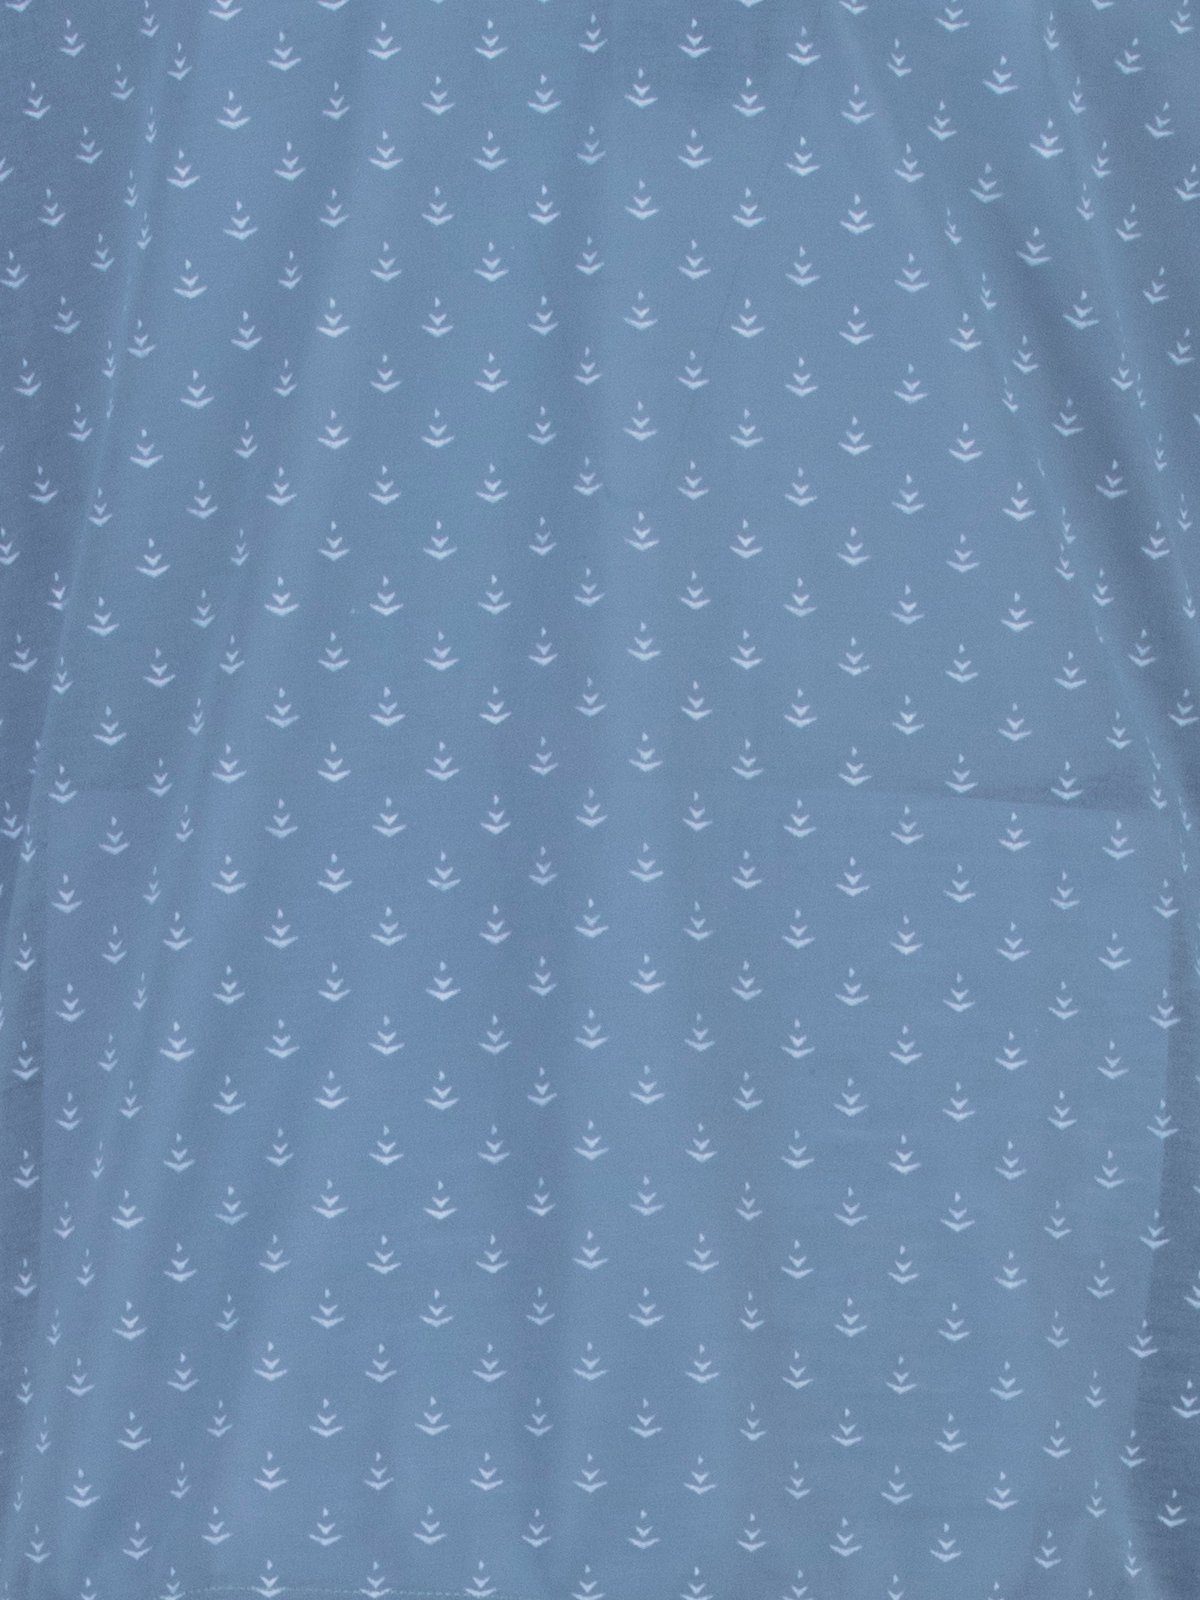 Pfeil graublau Set Langarm Schlafanzug Pyjama - Lucky